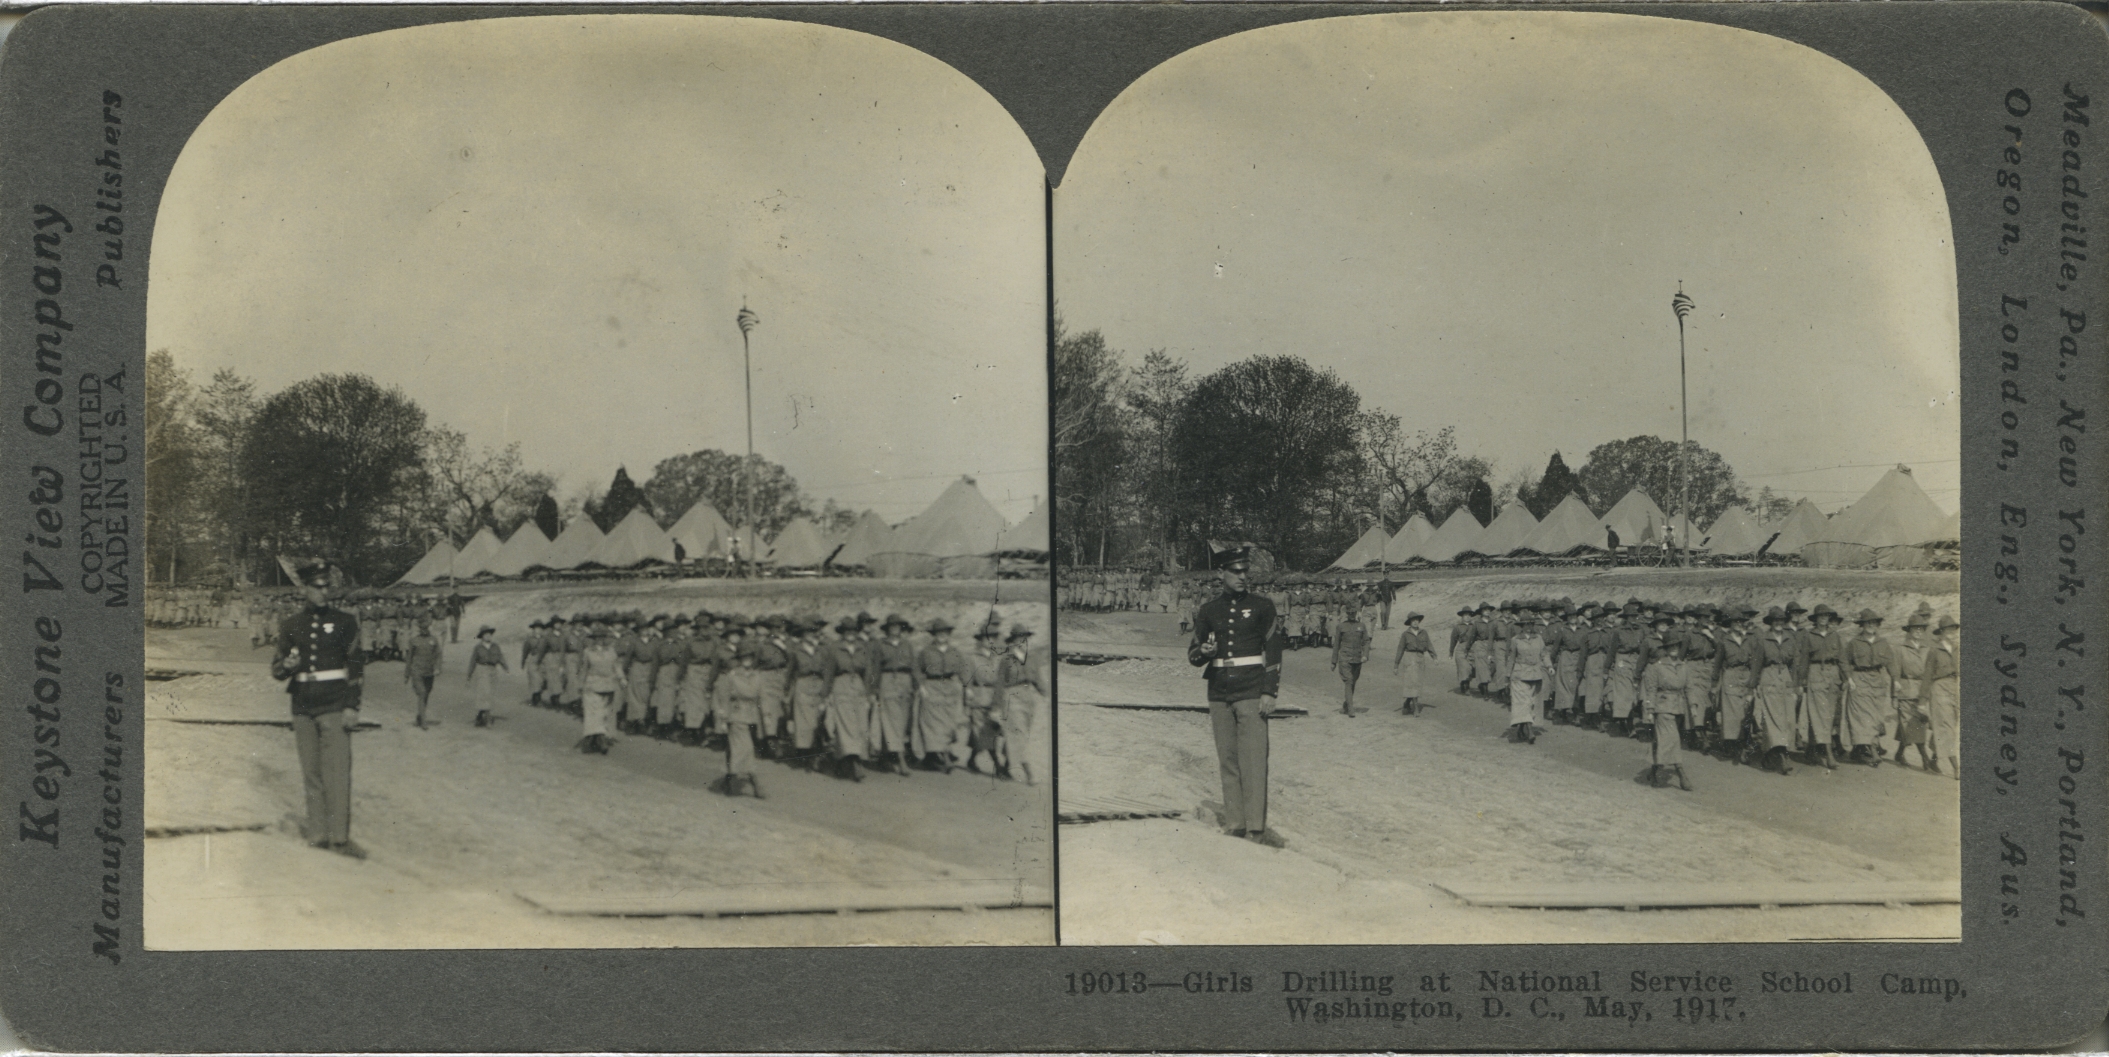 Girls Drilling at National Service School Camp, Washington, D. C., May, 1917